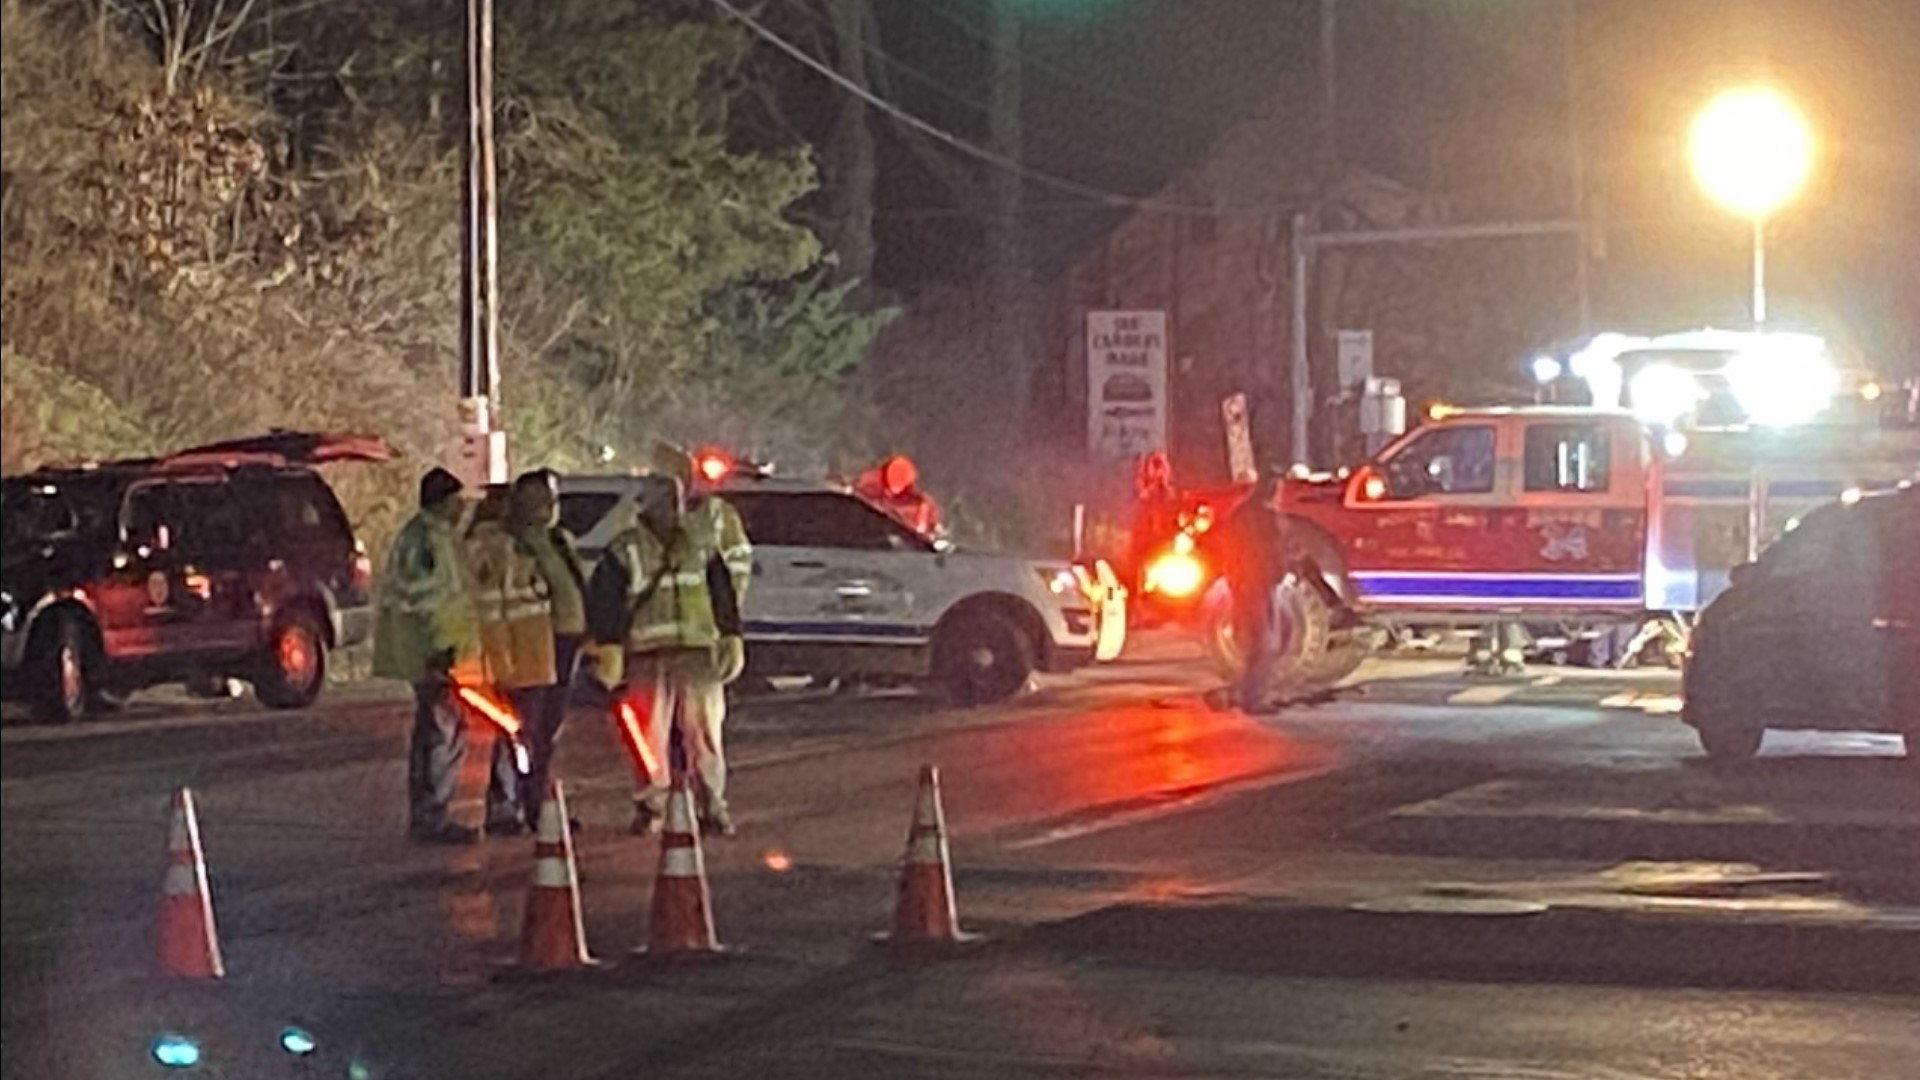 The crash happened around 6:30 p.m. Sunday night along Routes 611 and 715.